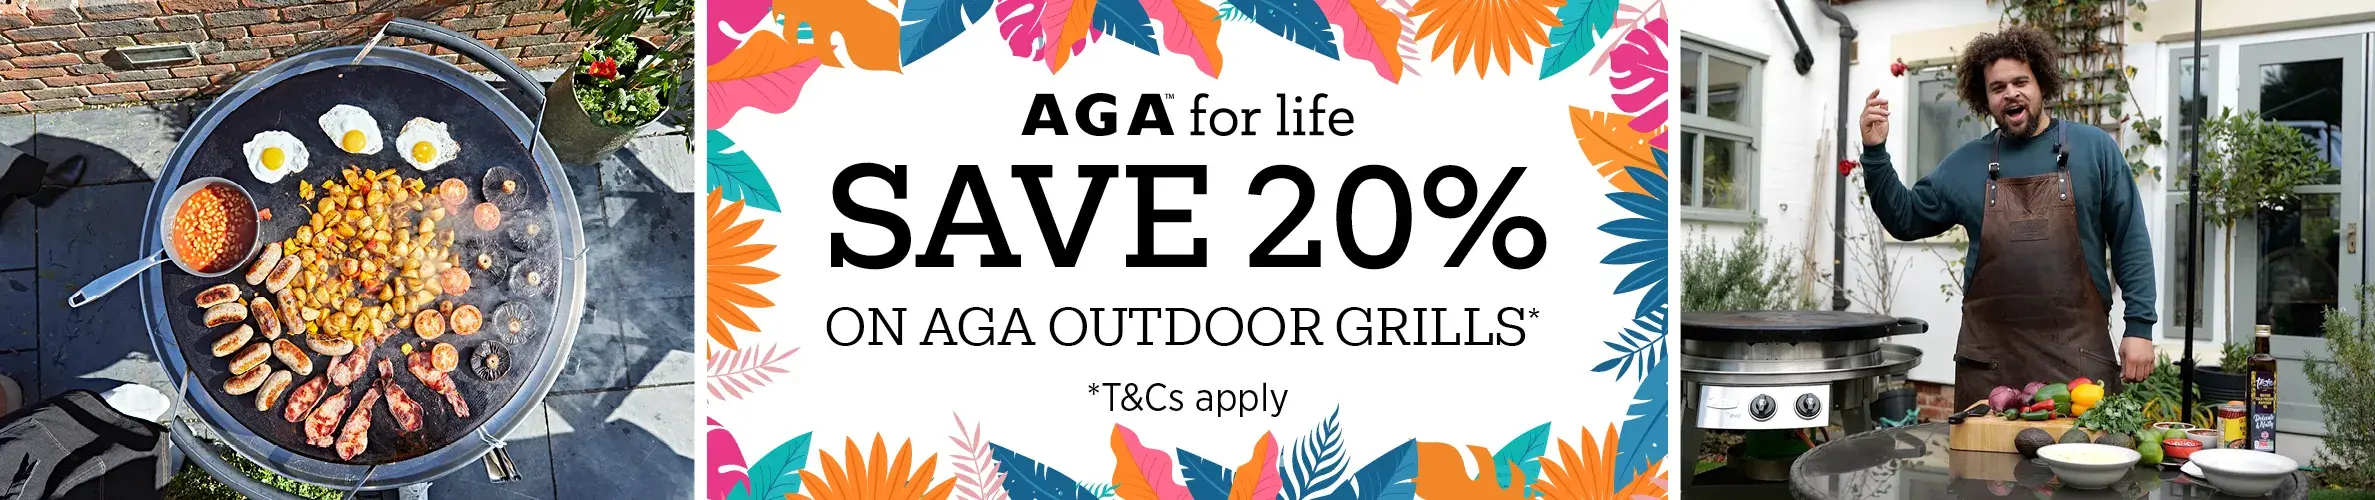 Save 20% on AGA Outdoors